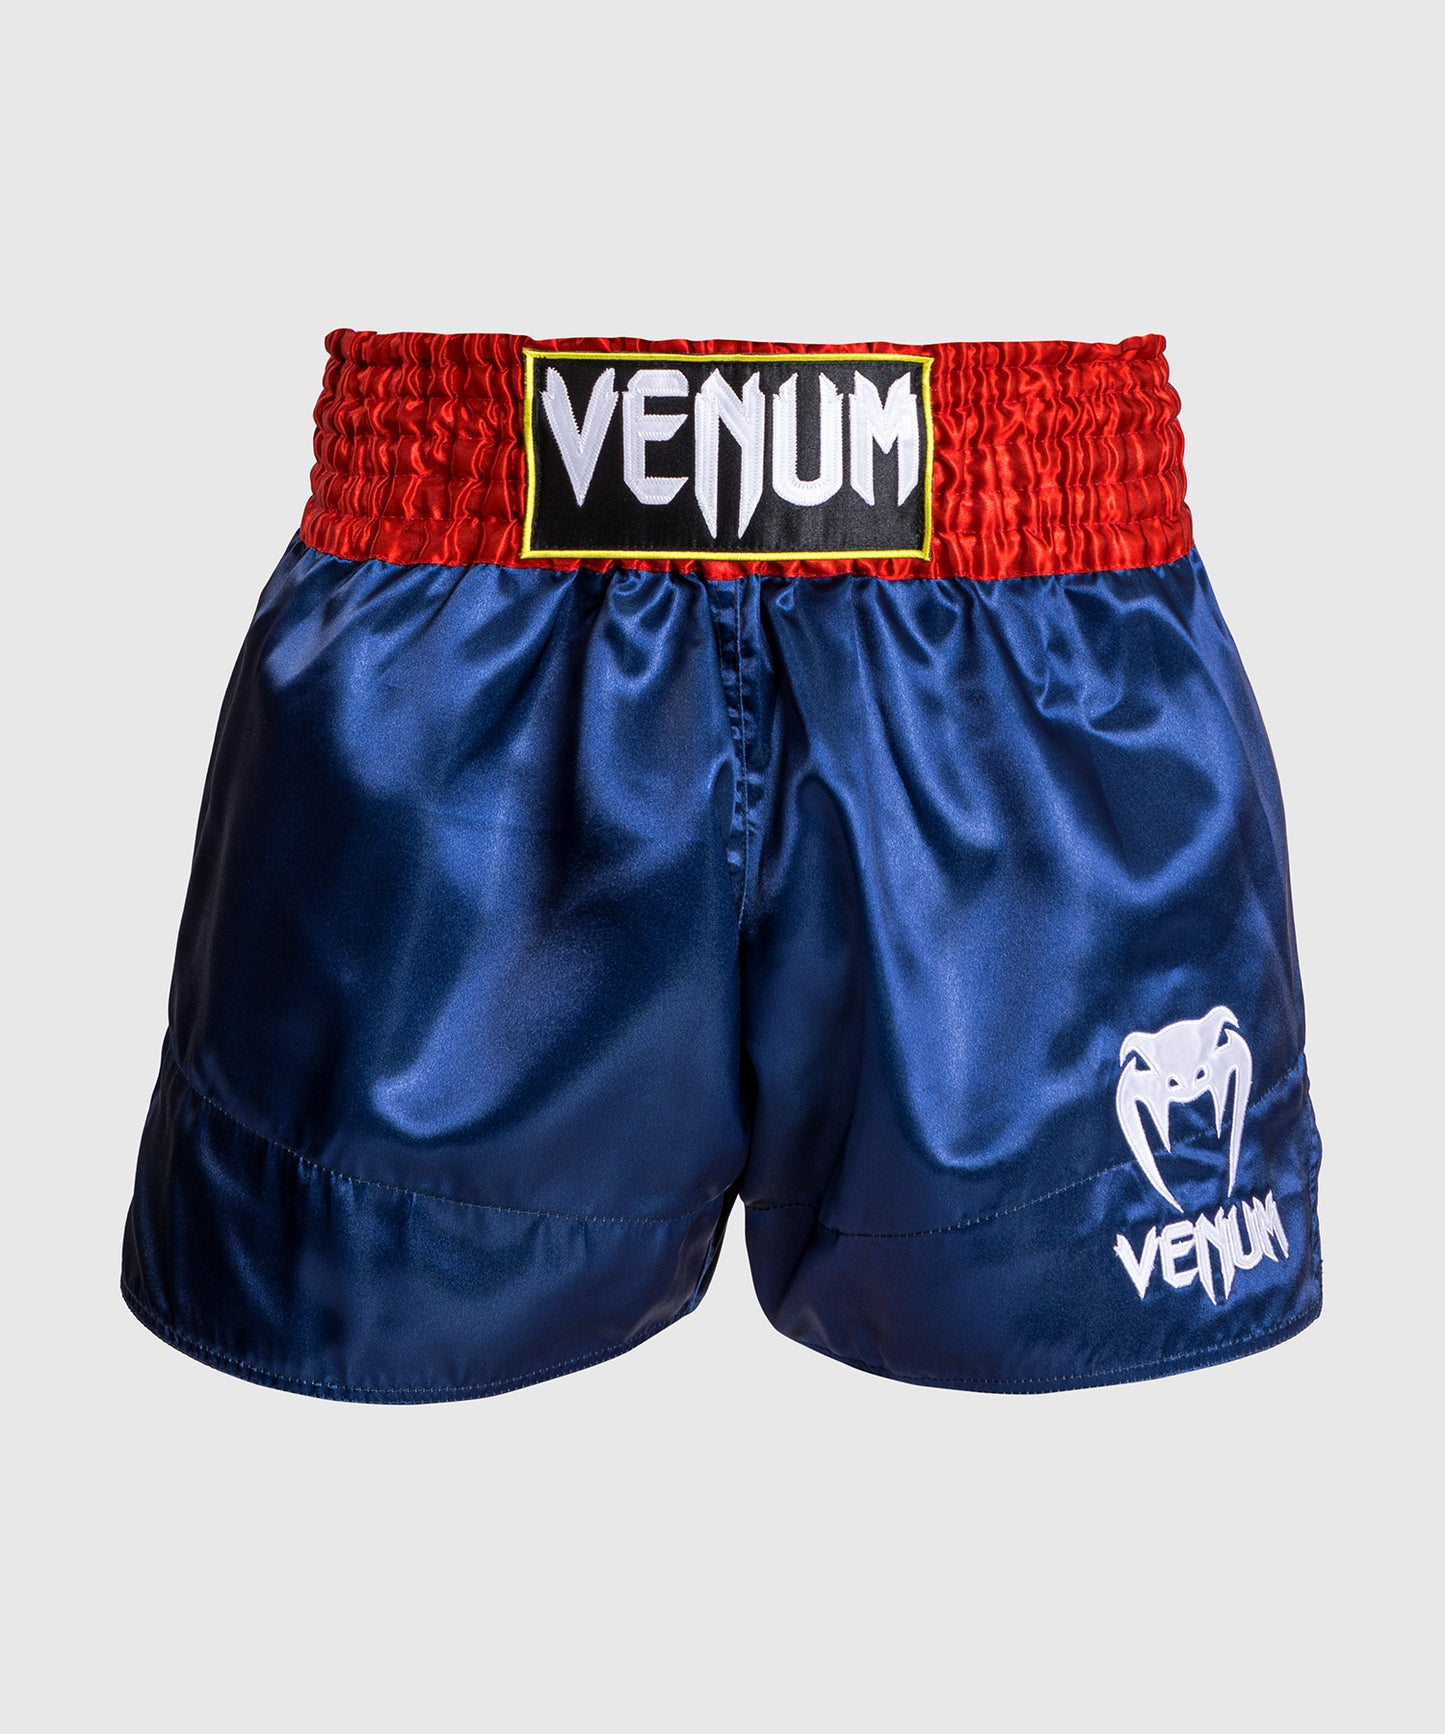 Venum Classic - Muay Thai Short - Azul/Rojo/Blanco